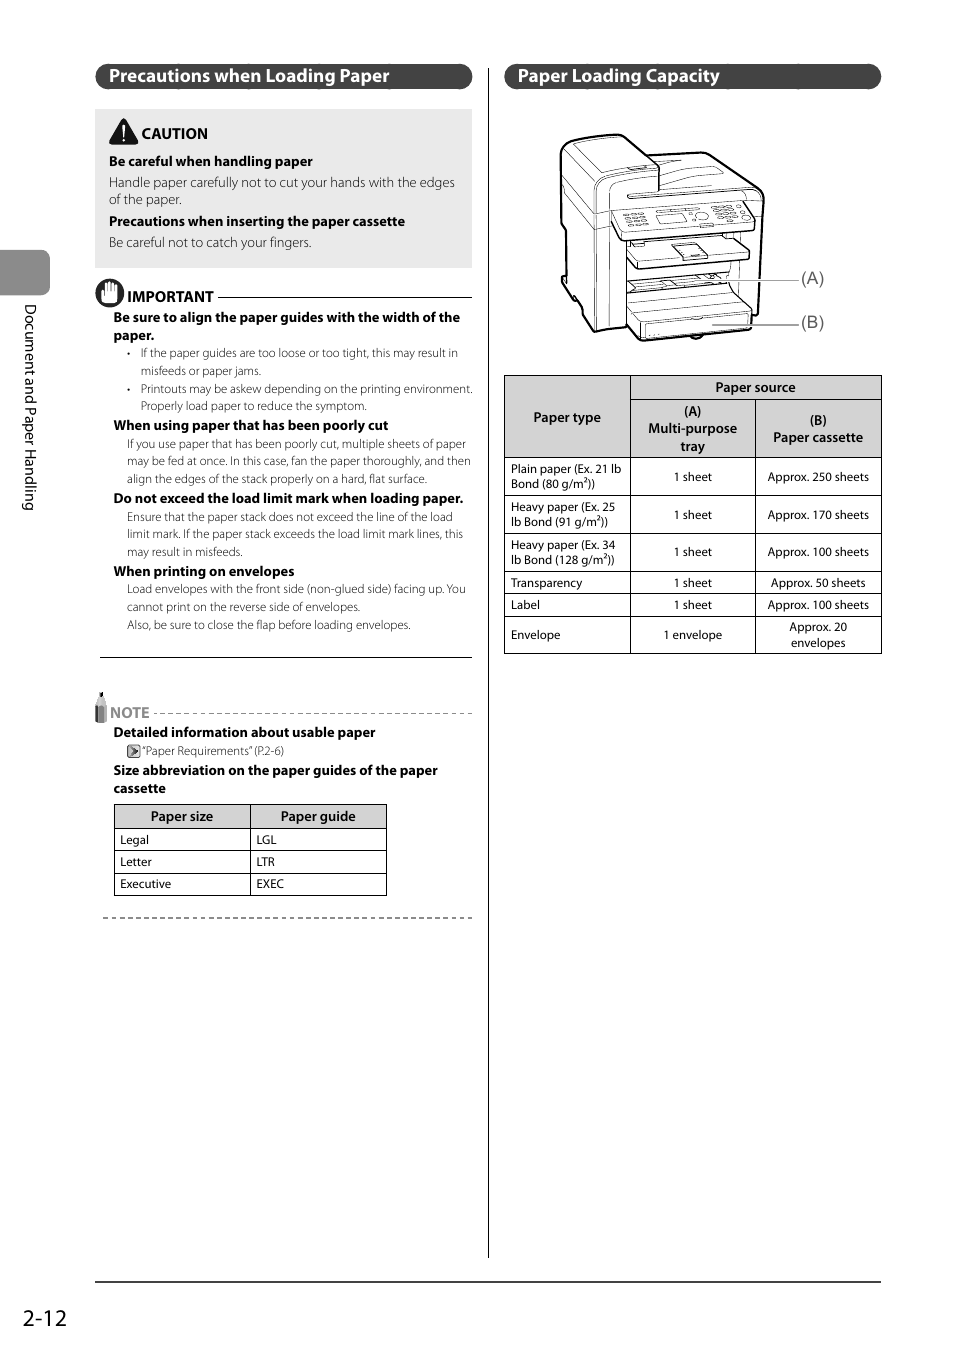 Precautions when loading paper, Paper loading capacity | Canon ImageCLASS MF4570DN User Manual | Page 48 / 164